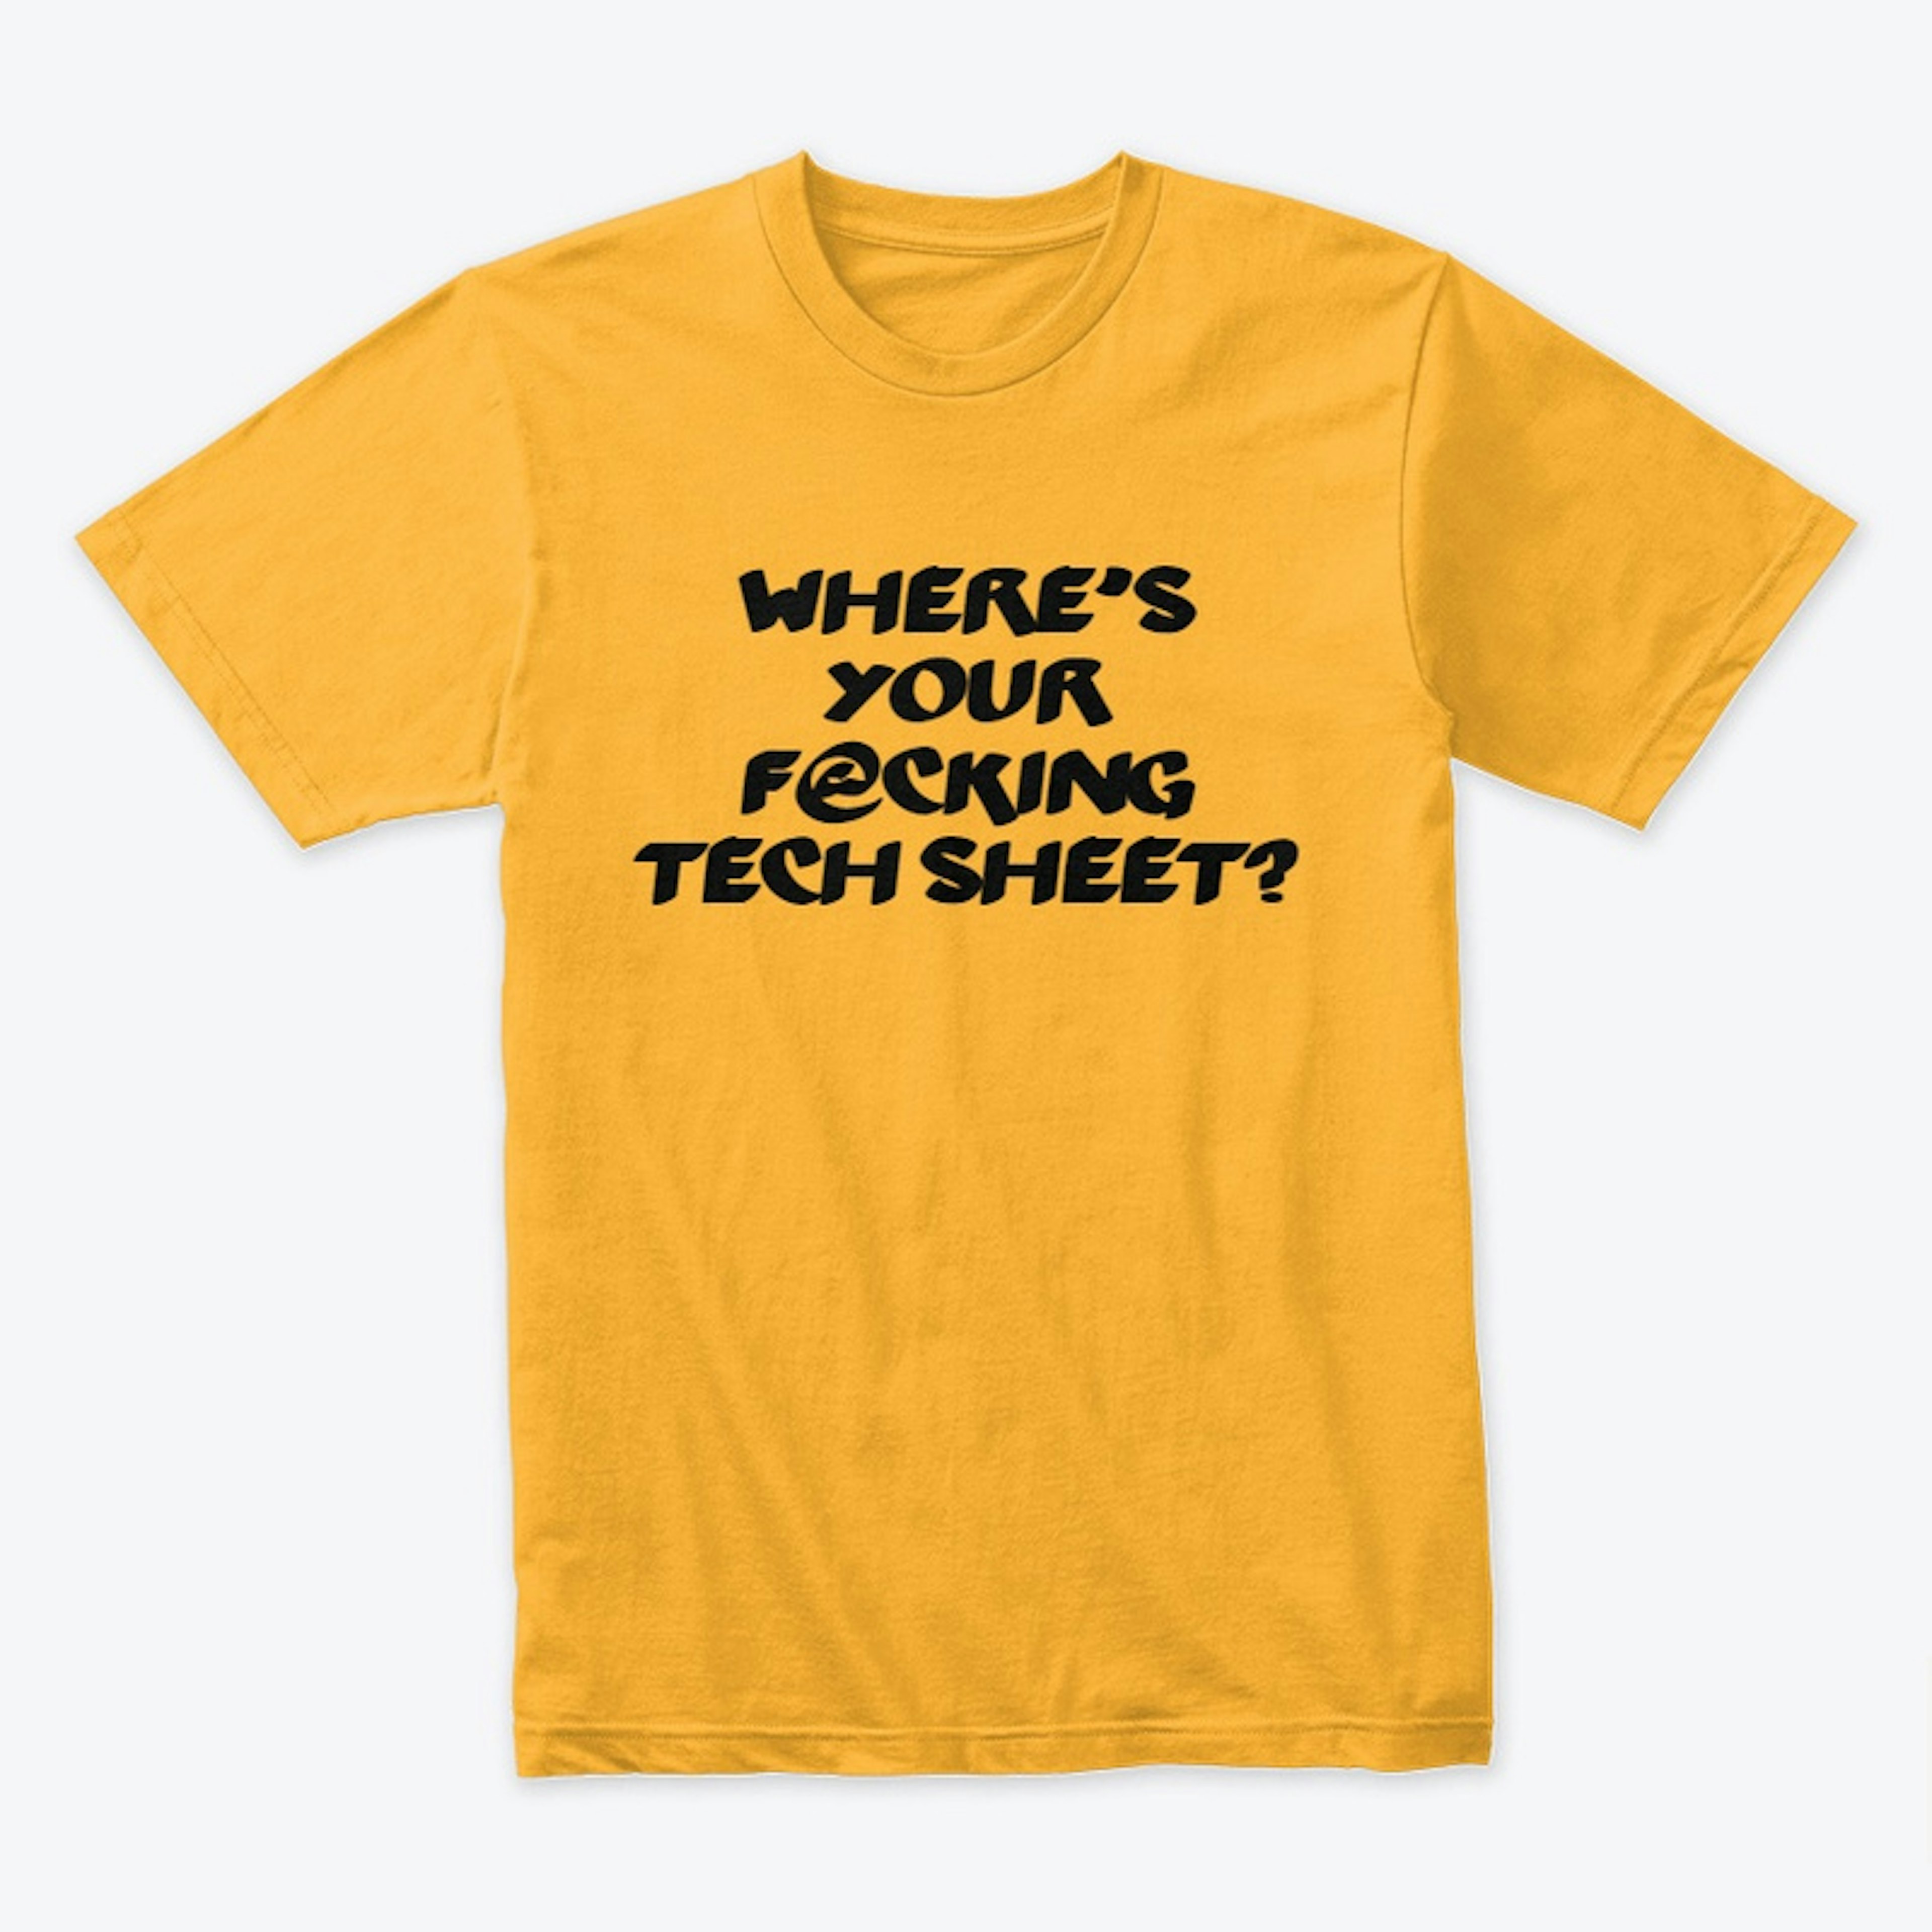 Tech sheet?